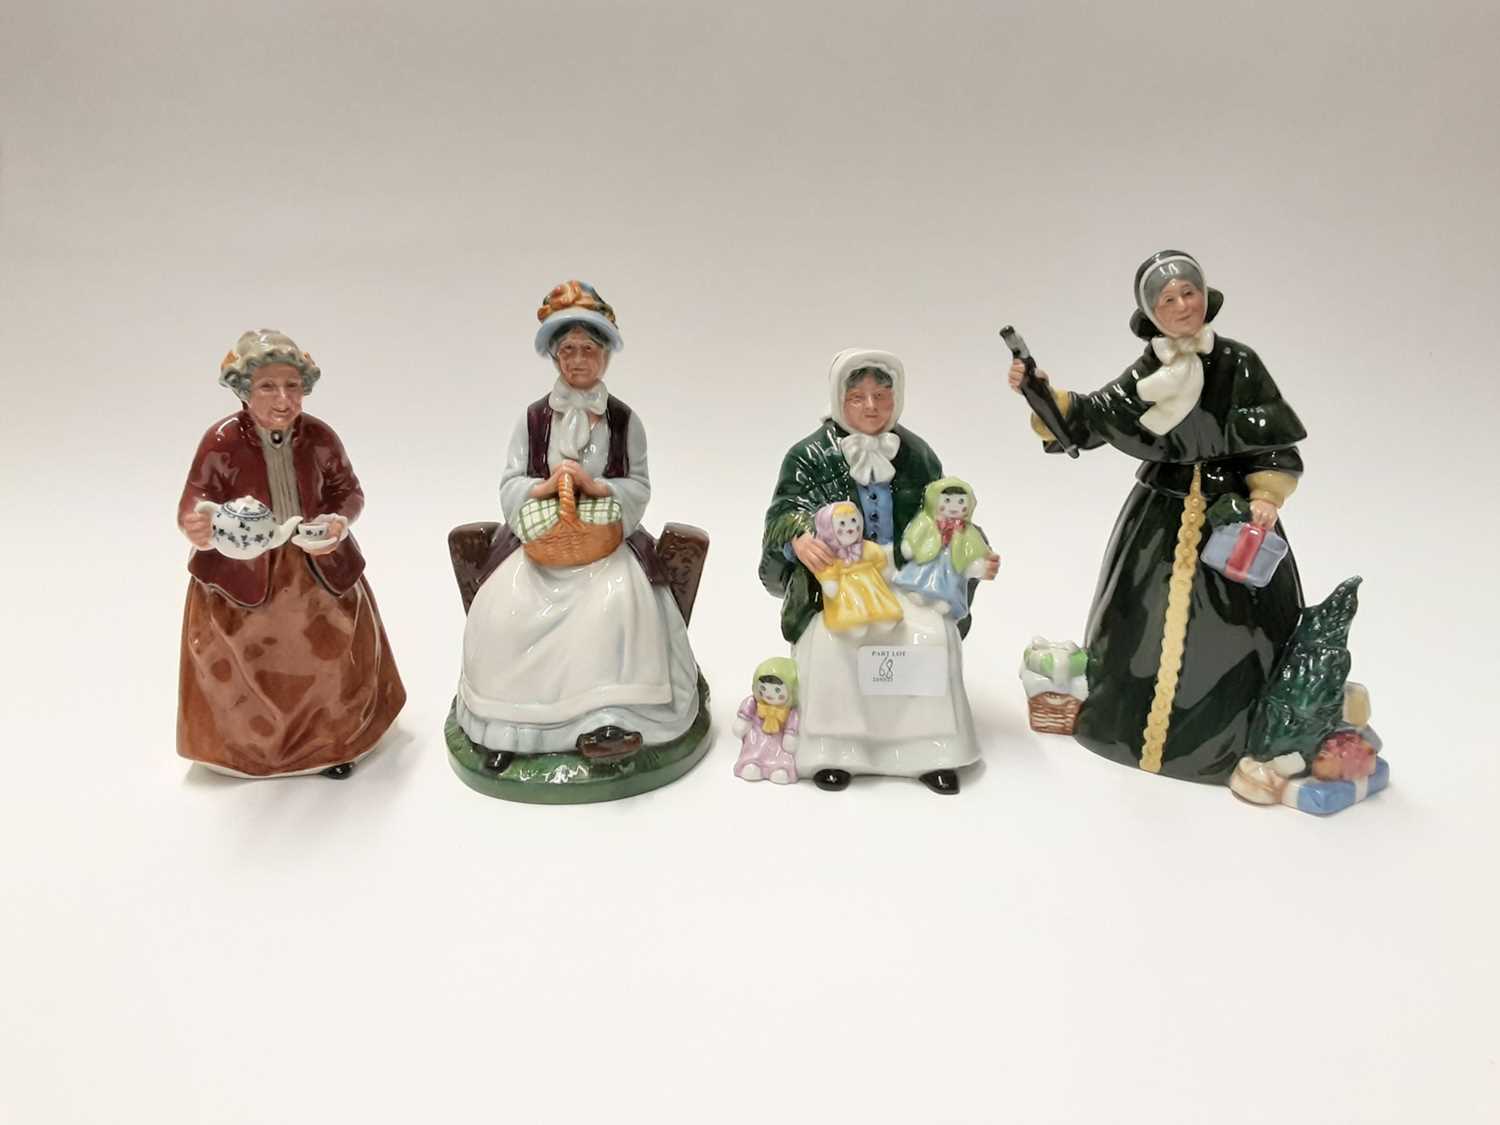 Lot 68 - Four Royal Doulton figures - Christmas Parcels HN2851, Rest Awhile HN2728, Teatime HN2255 and The Rag Doll Seller HN2944